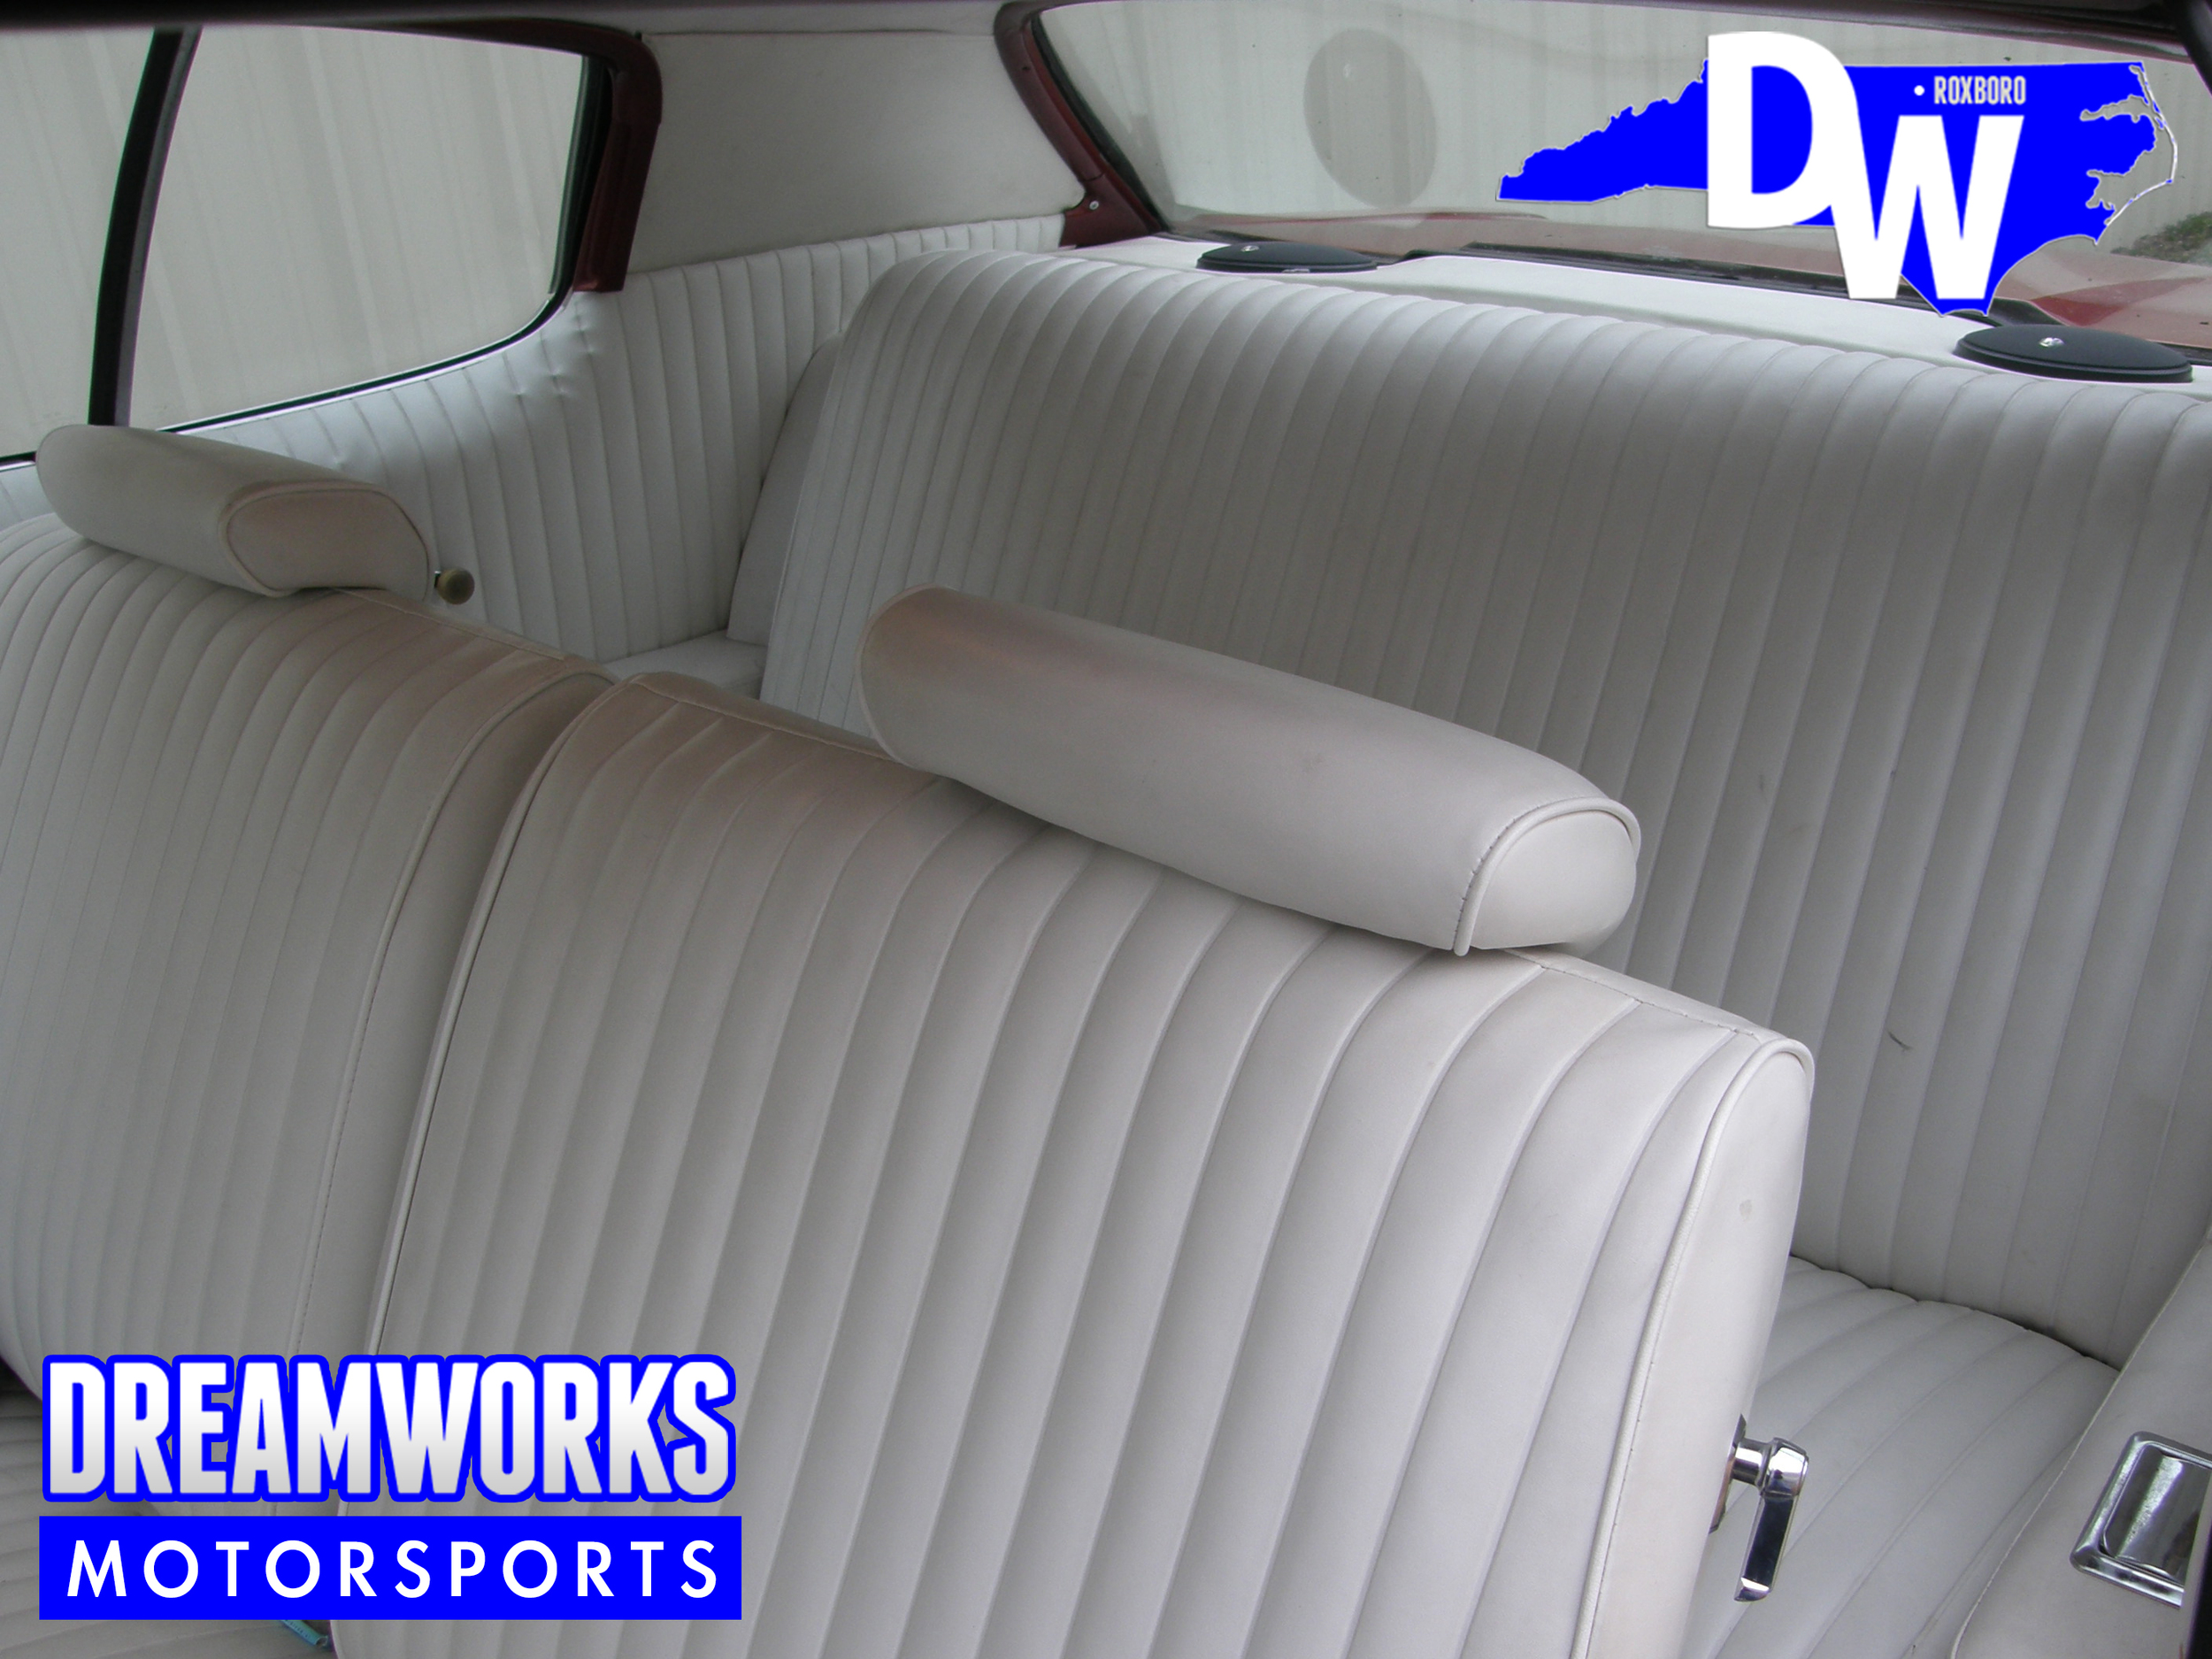 73-Chevrolet-Caprice-DUB-Dreamworks-Motorsports-5.jpg